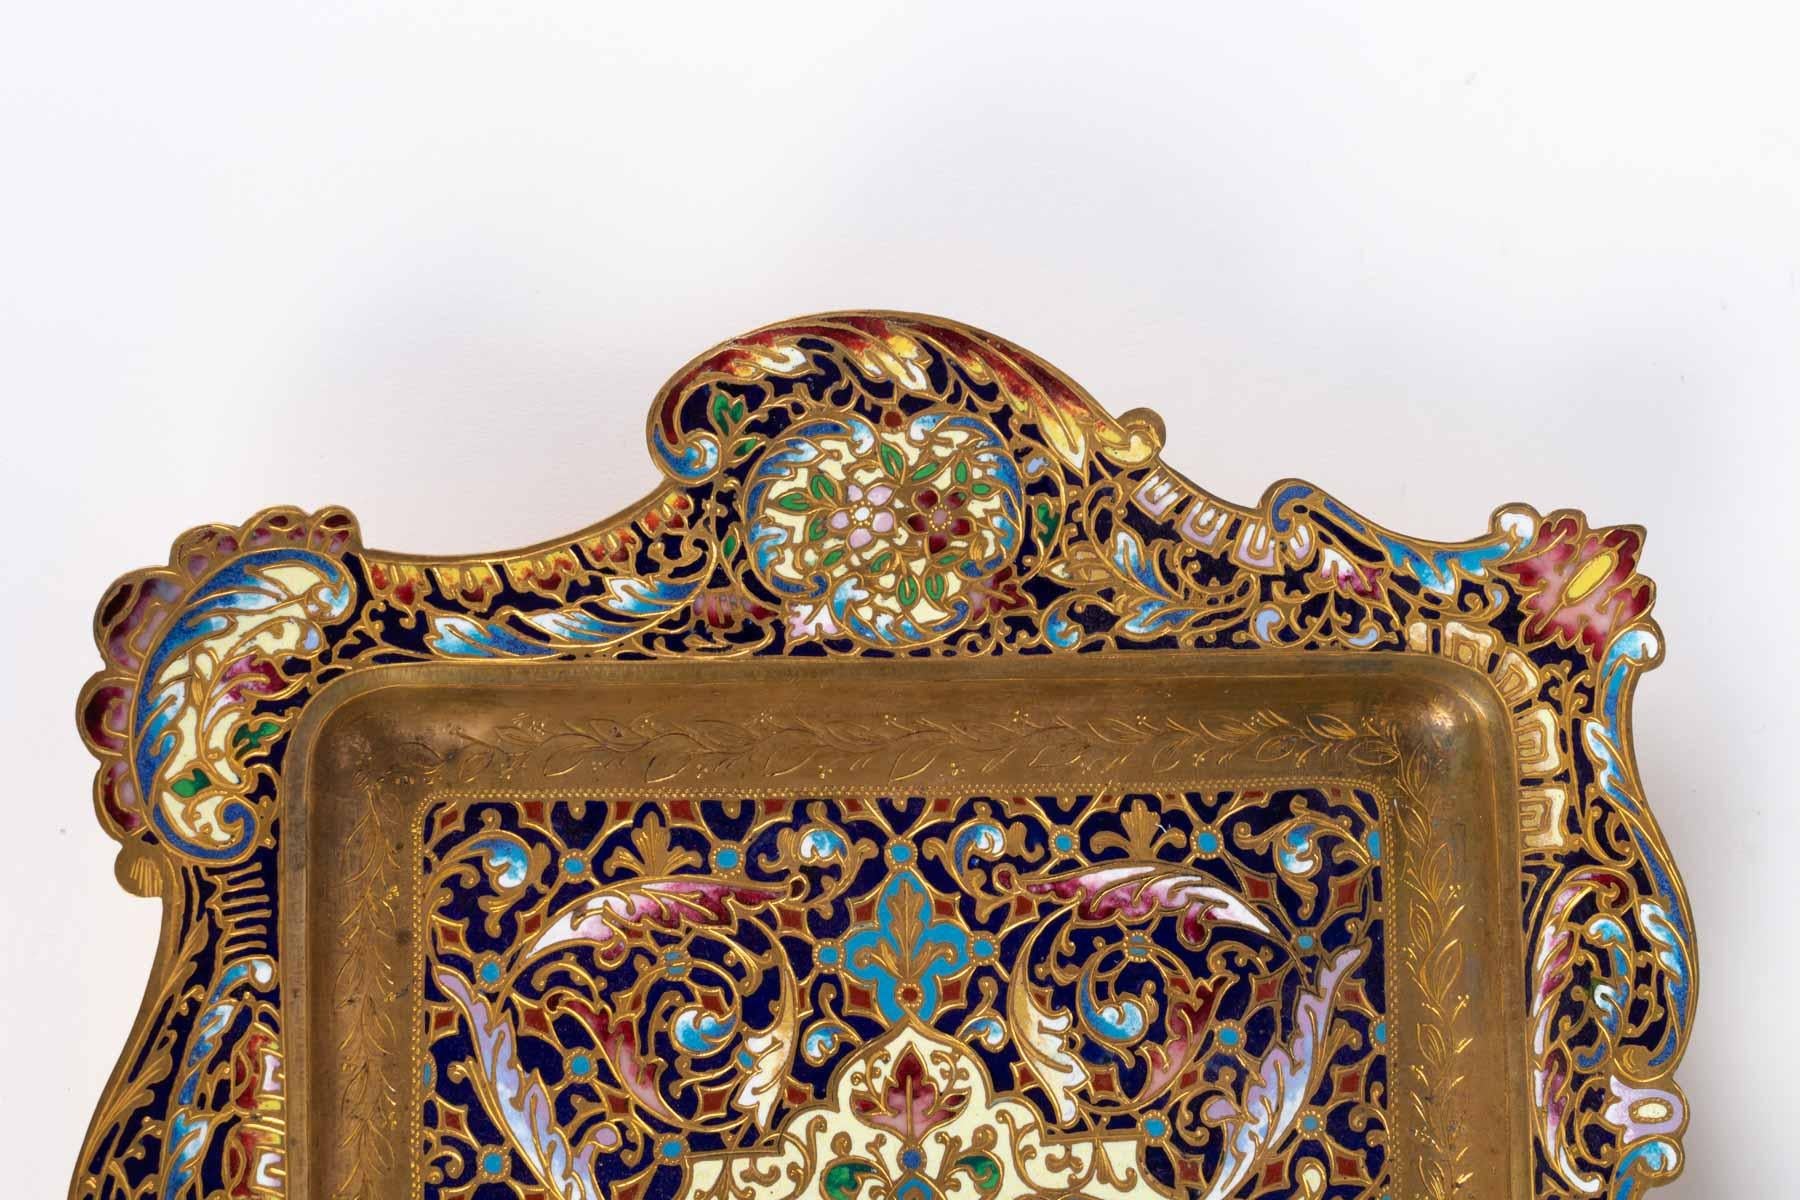 19th century gilt bronze and enamelled bronze tray, Napoleon III period
Measures: W 36cm, L 22cm, D 4cm.